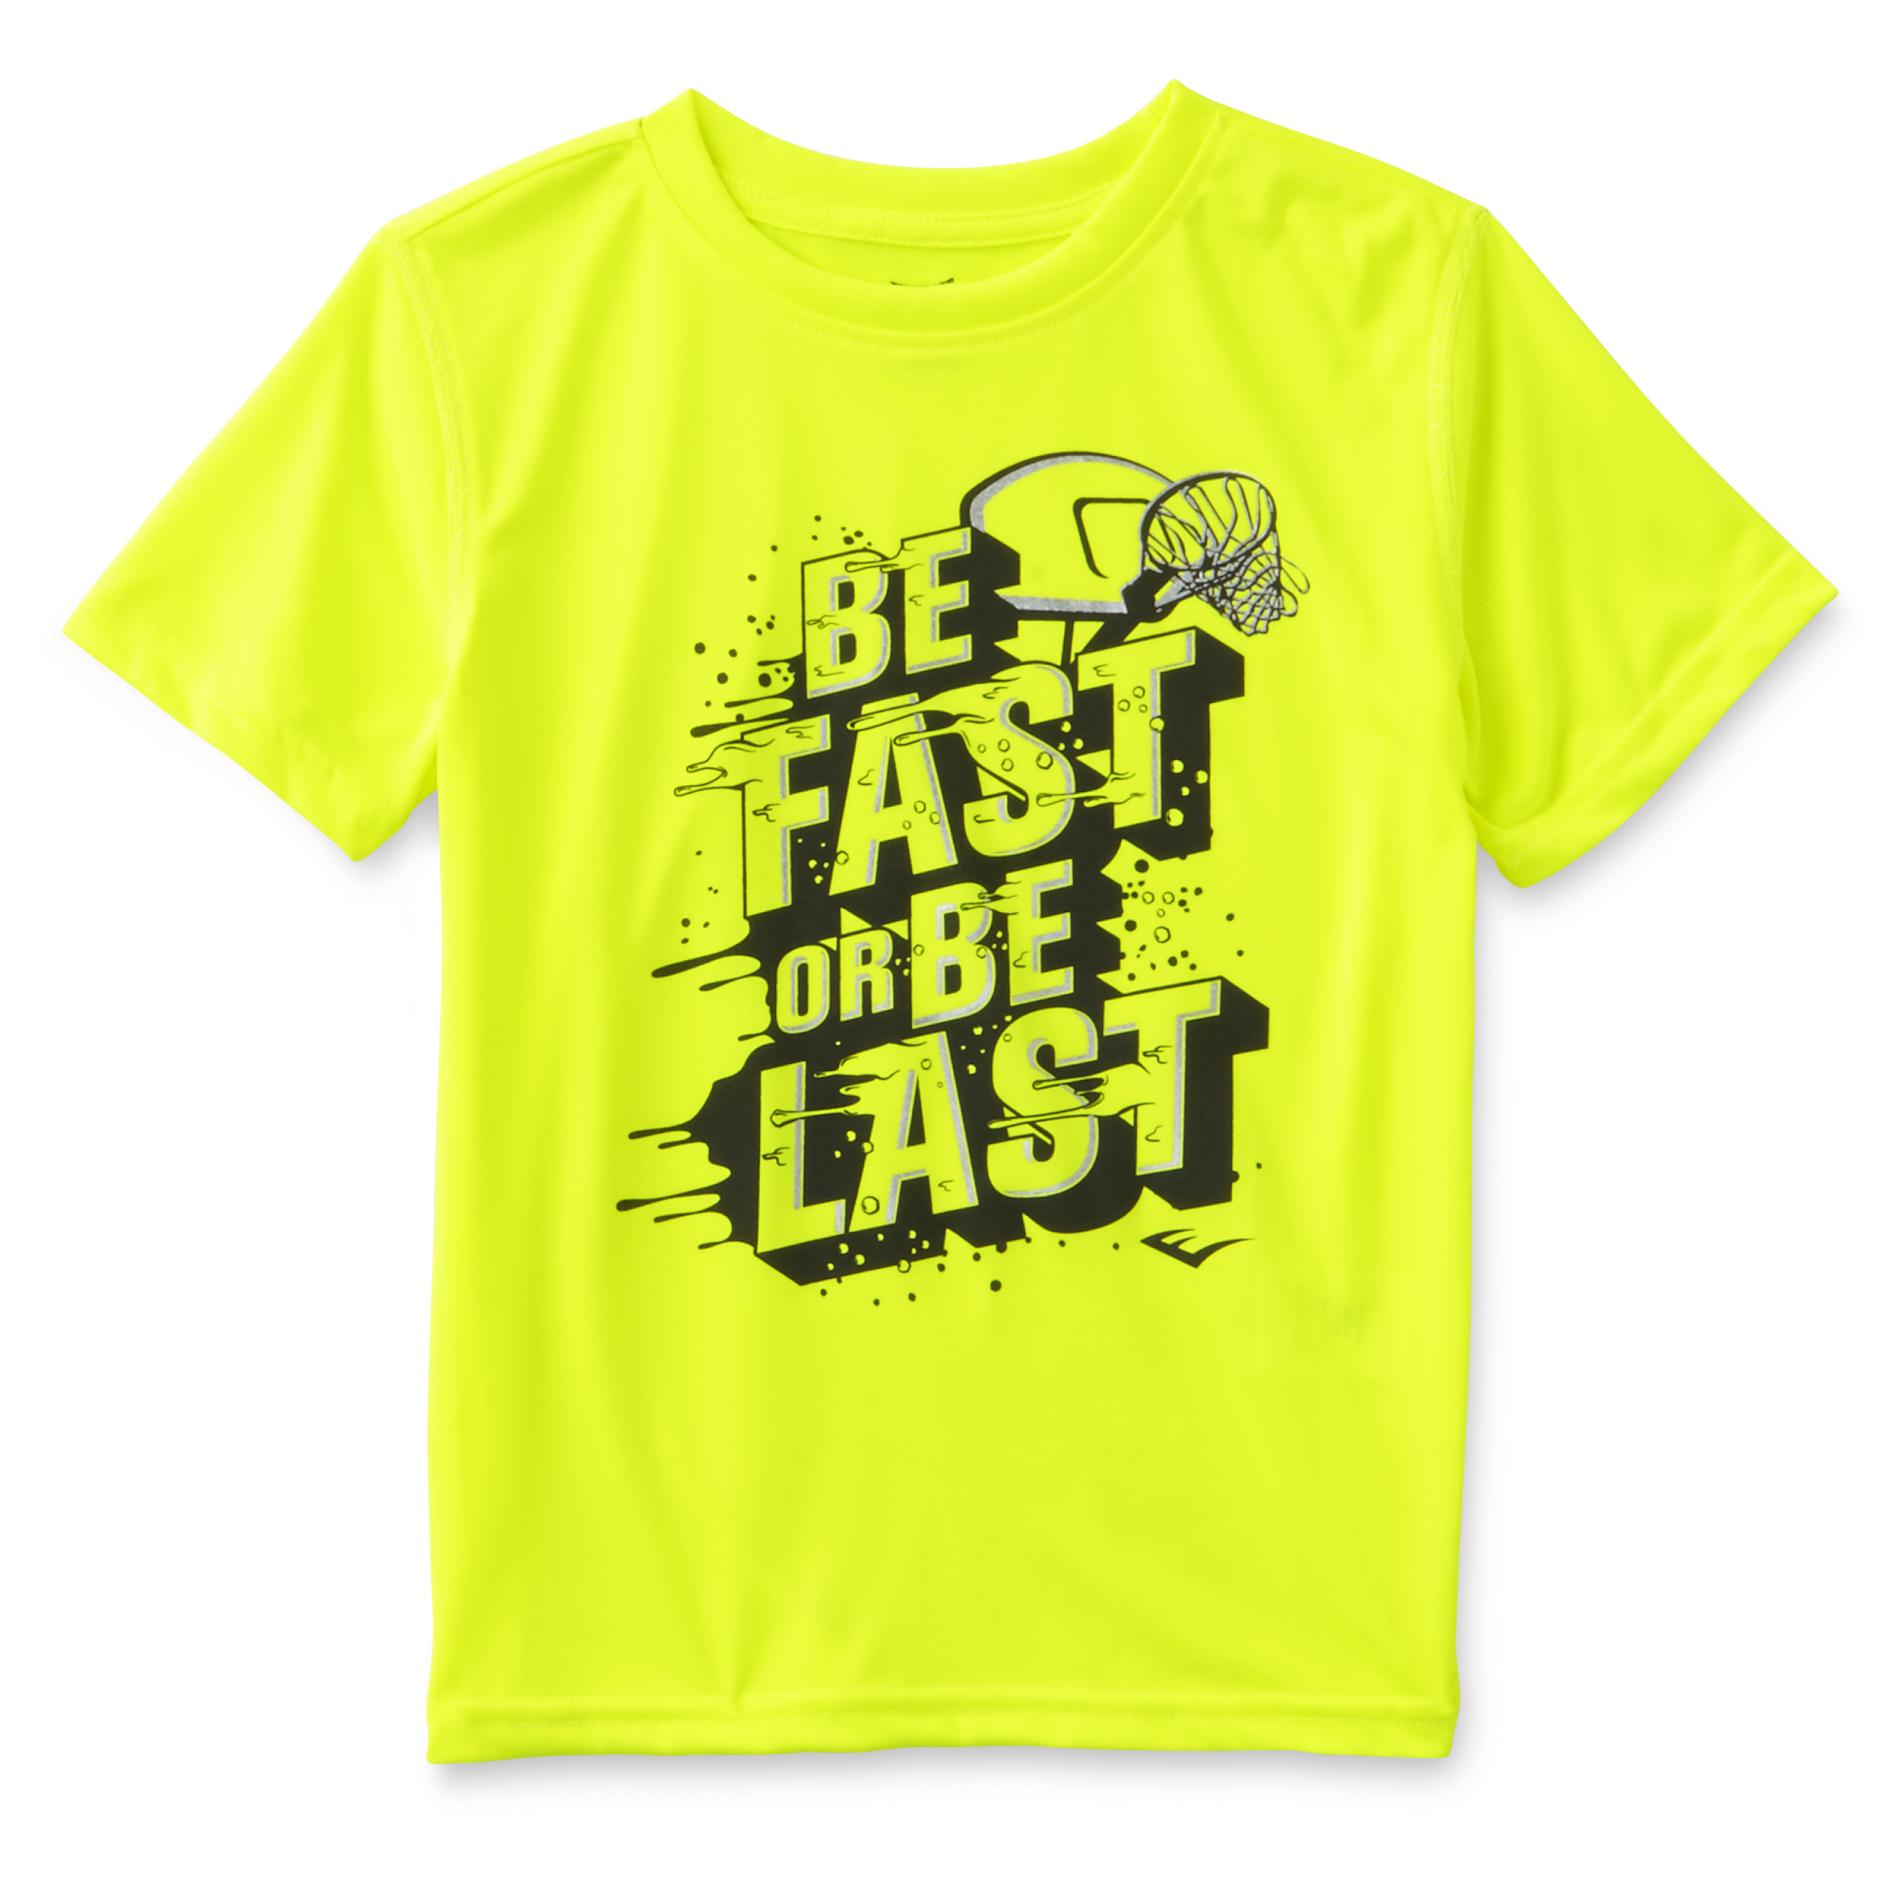 Everlast&reg; Boy's Graphic Athletic Shirt - Be Fast